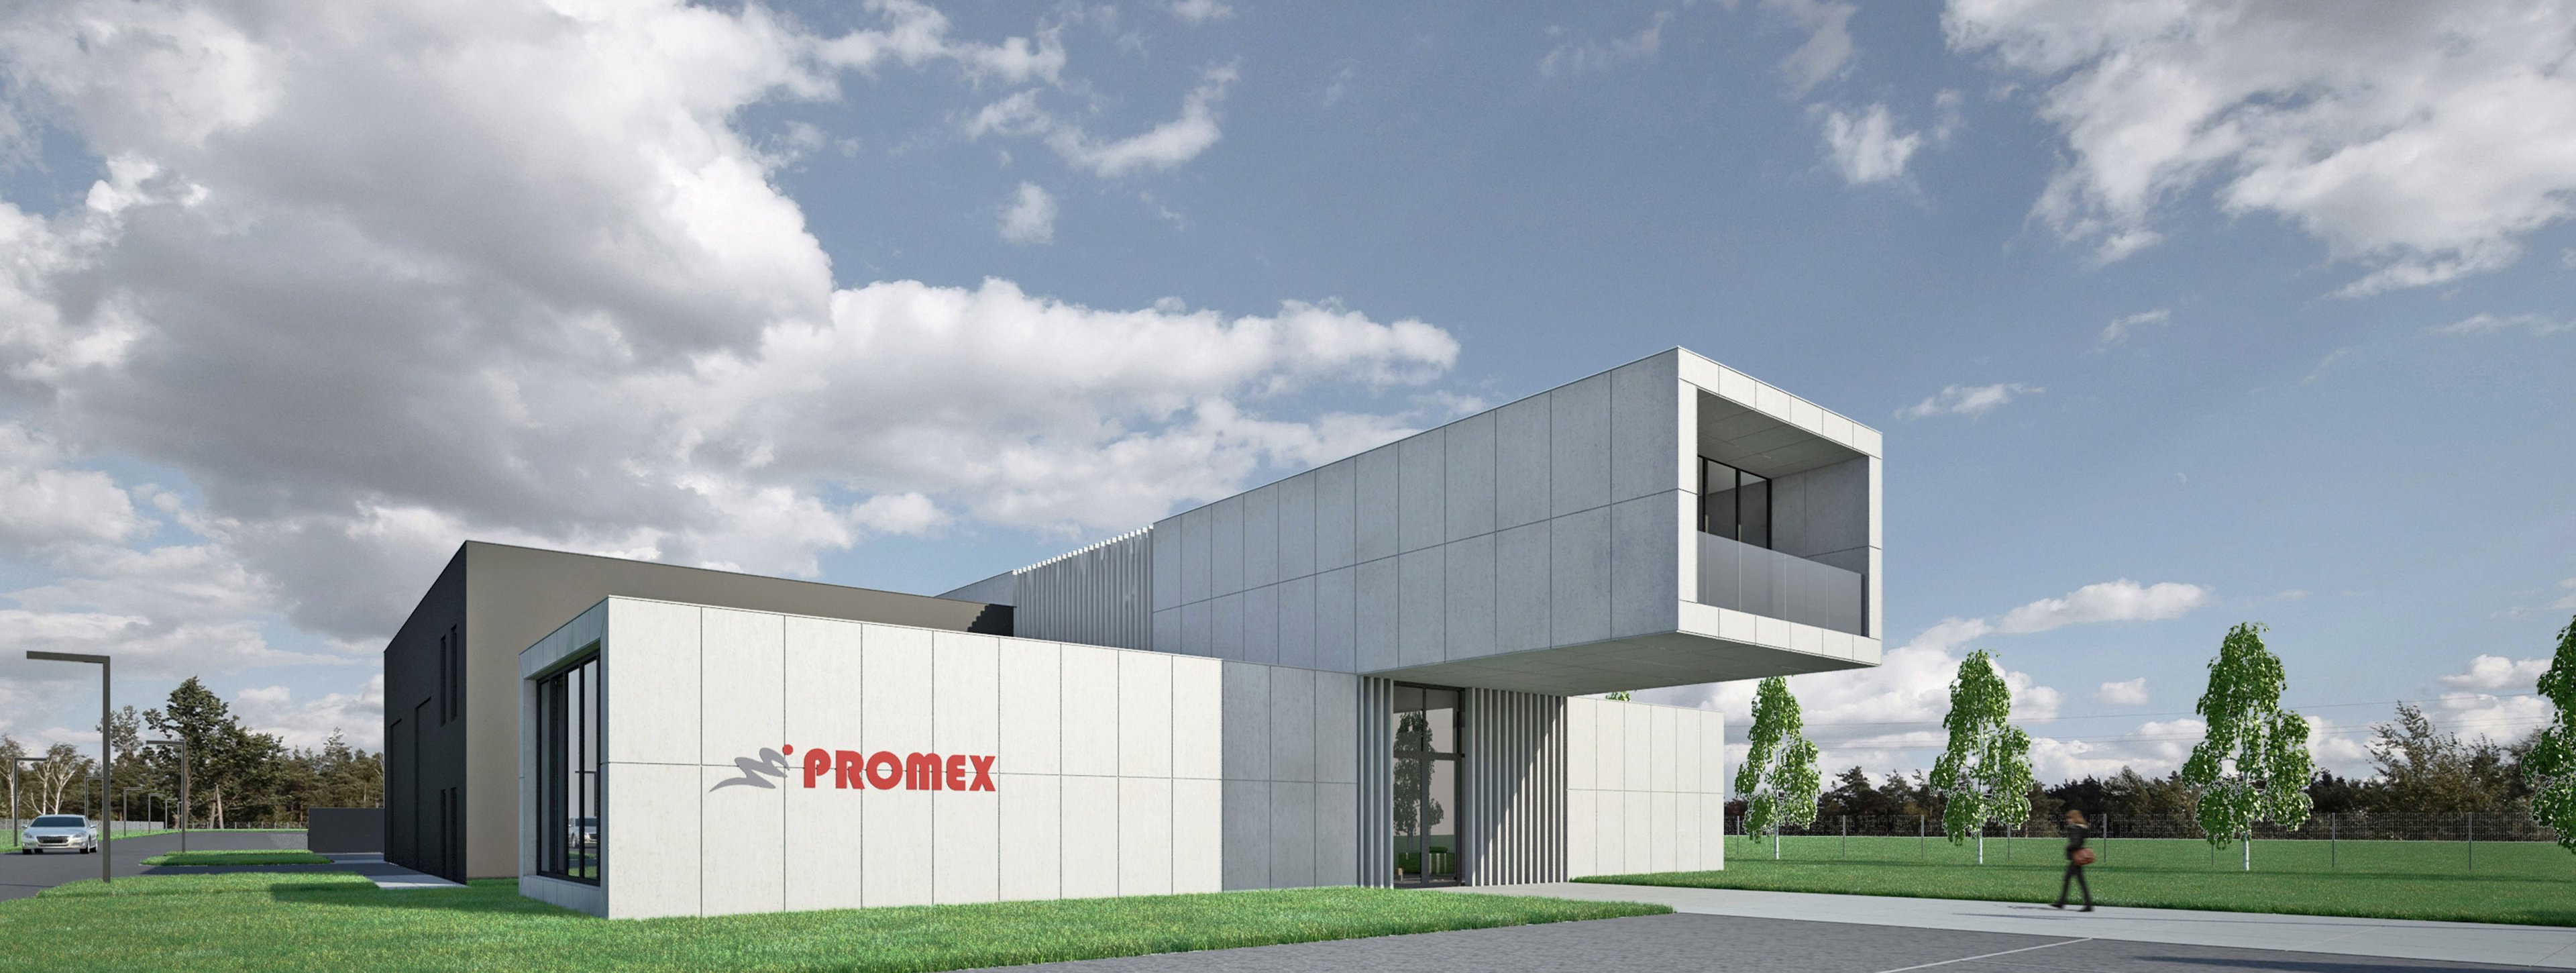 Promex - the company's seat